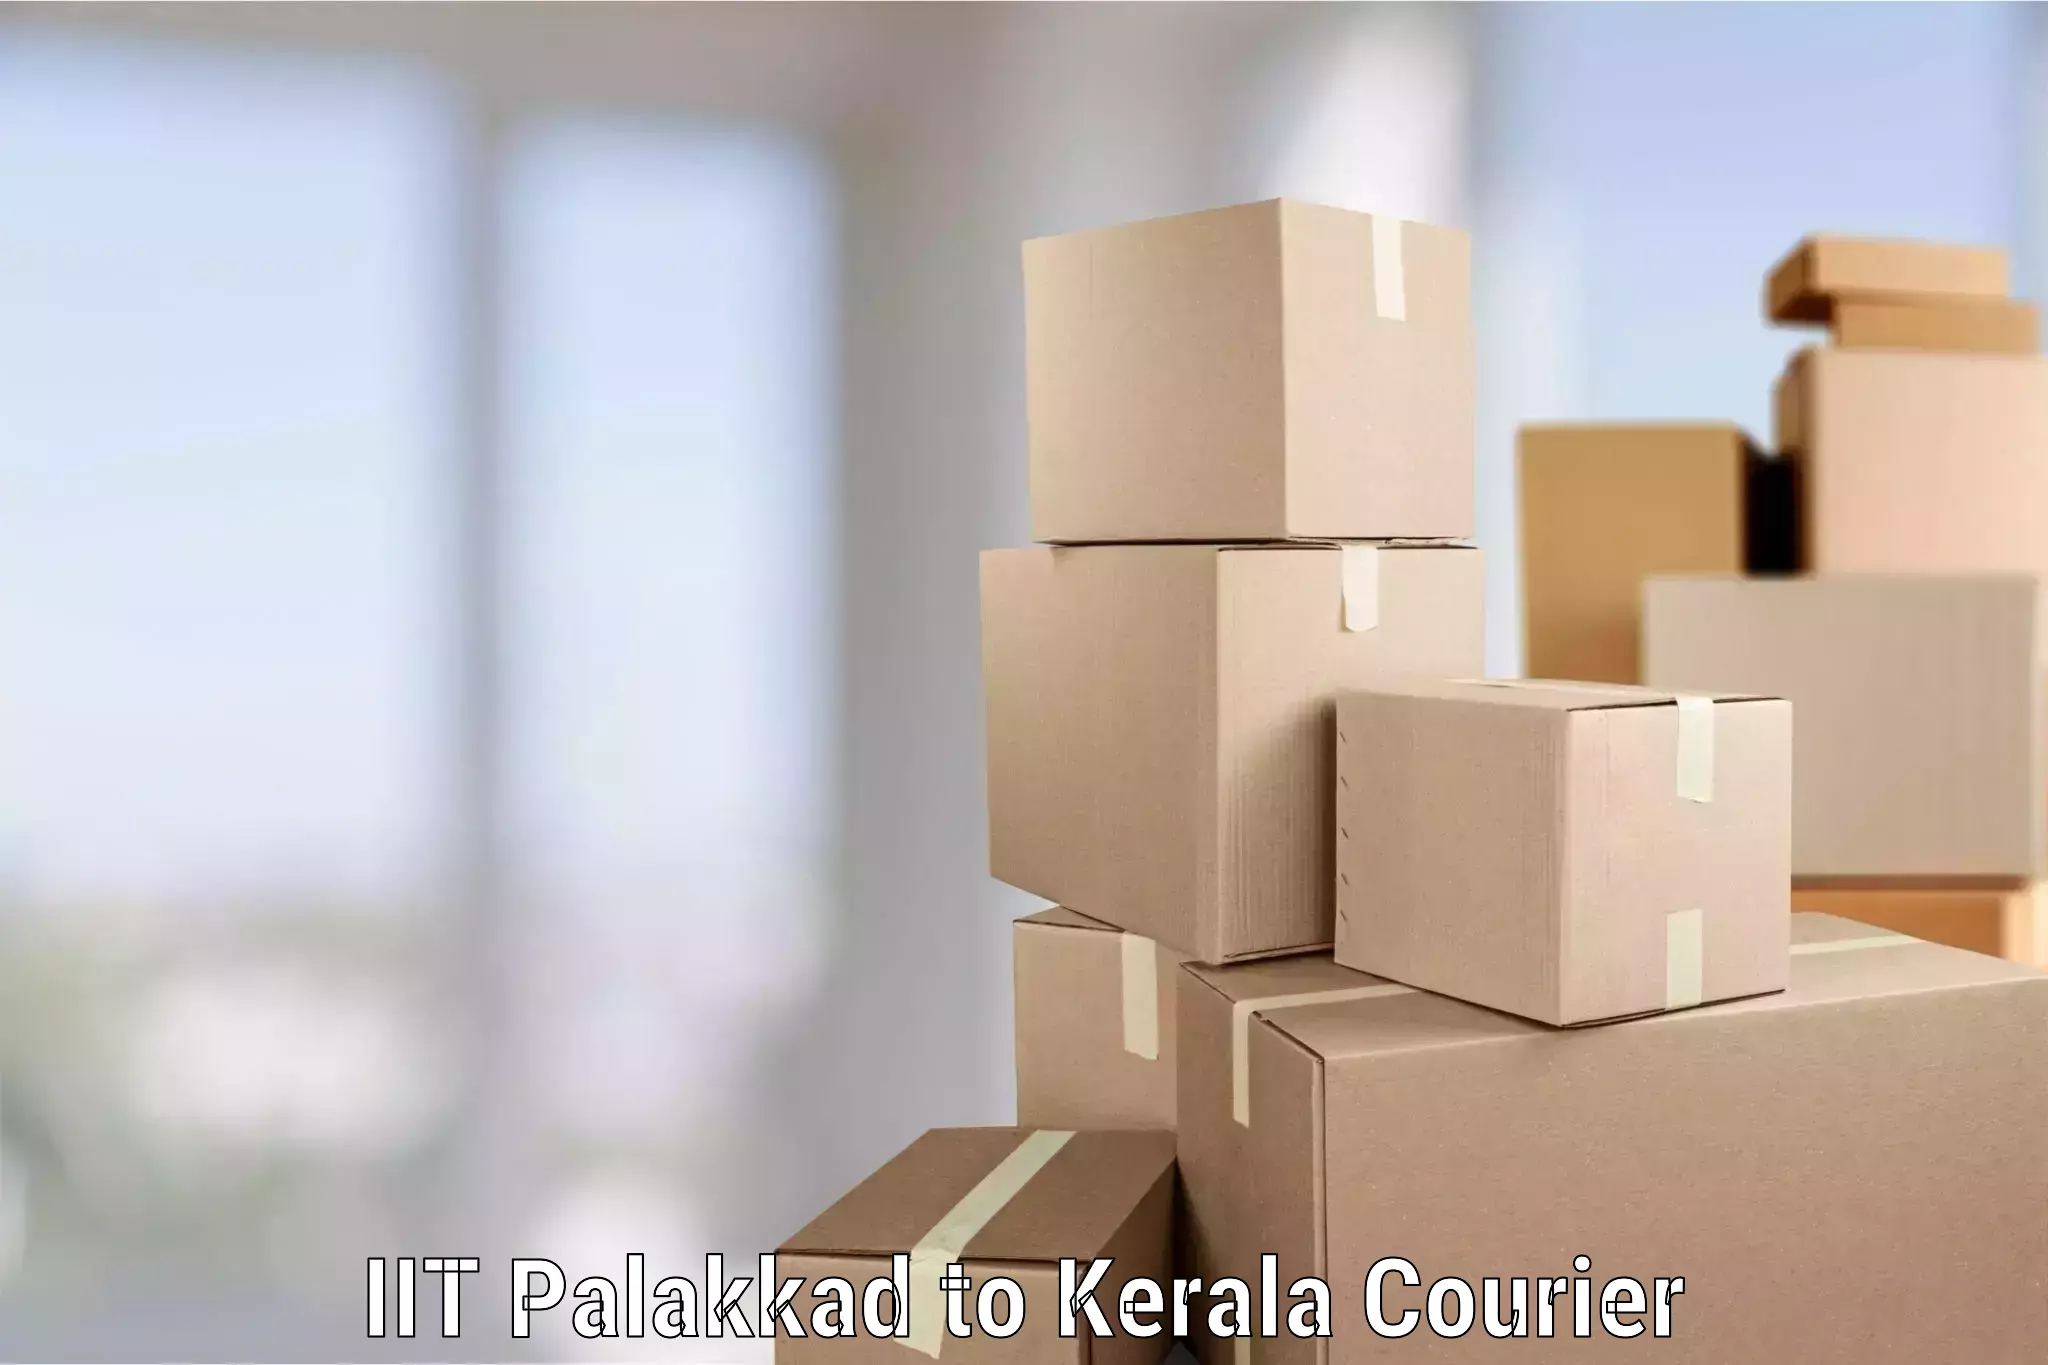 Trusted furniture transport in IIT Palakkad to Kerala